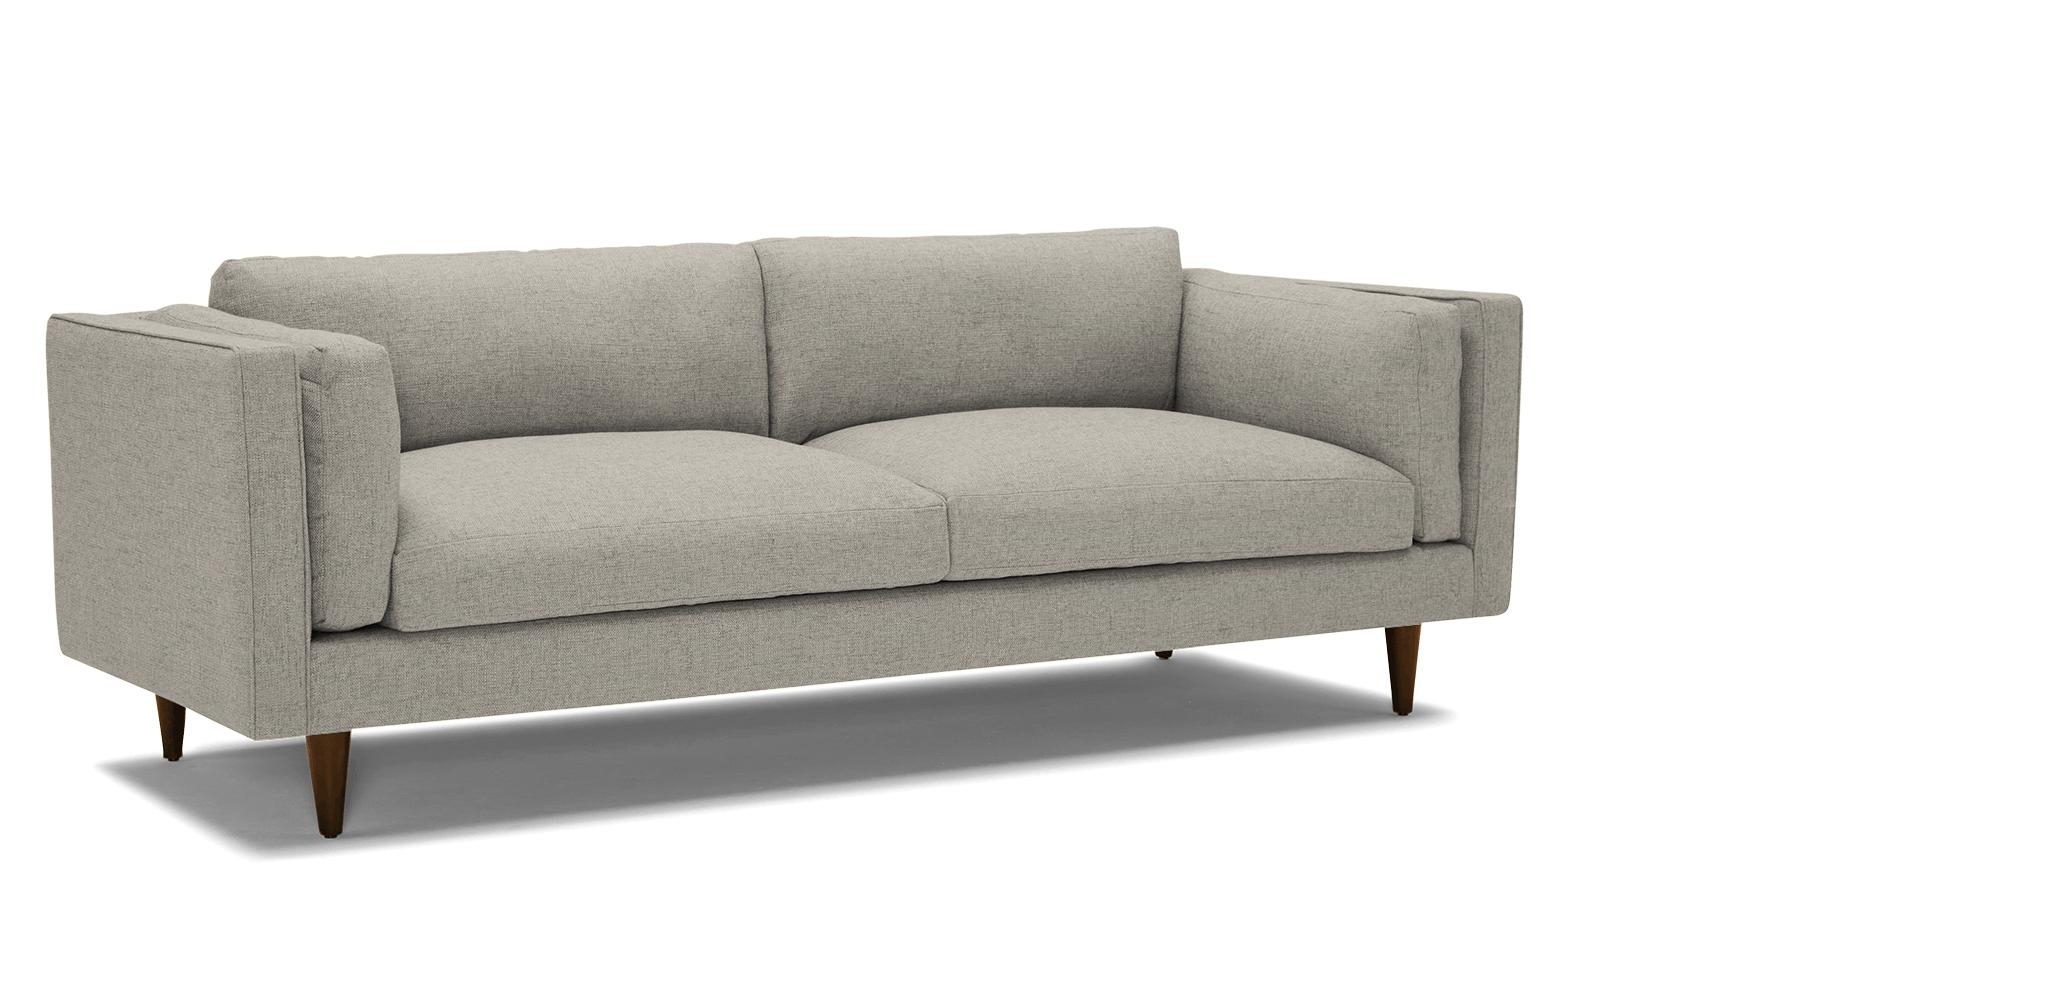 White Parker Mid Century Modern Sofa - Bloke Cotton - Mocha - Image 1